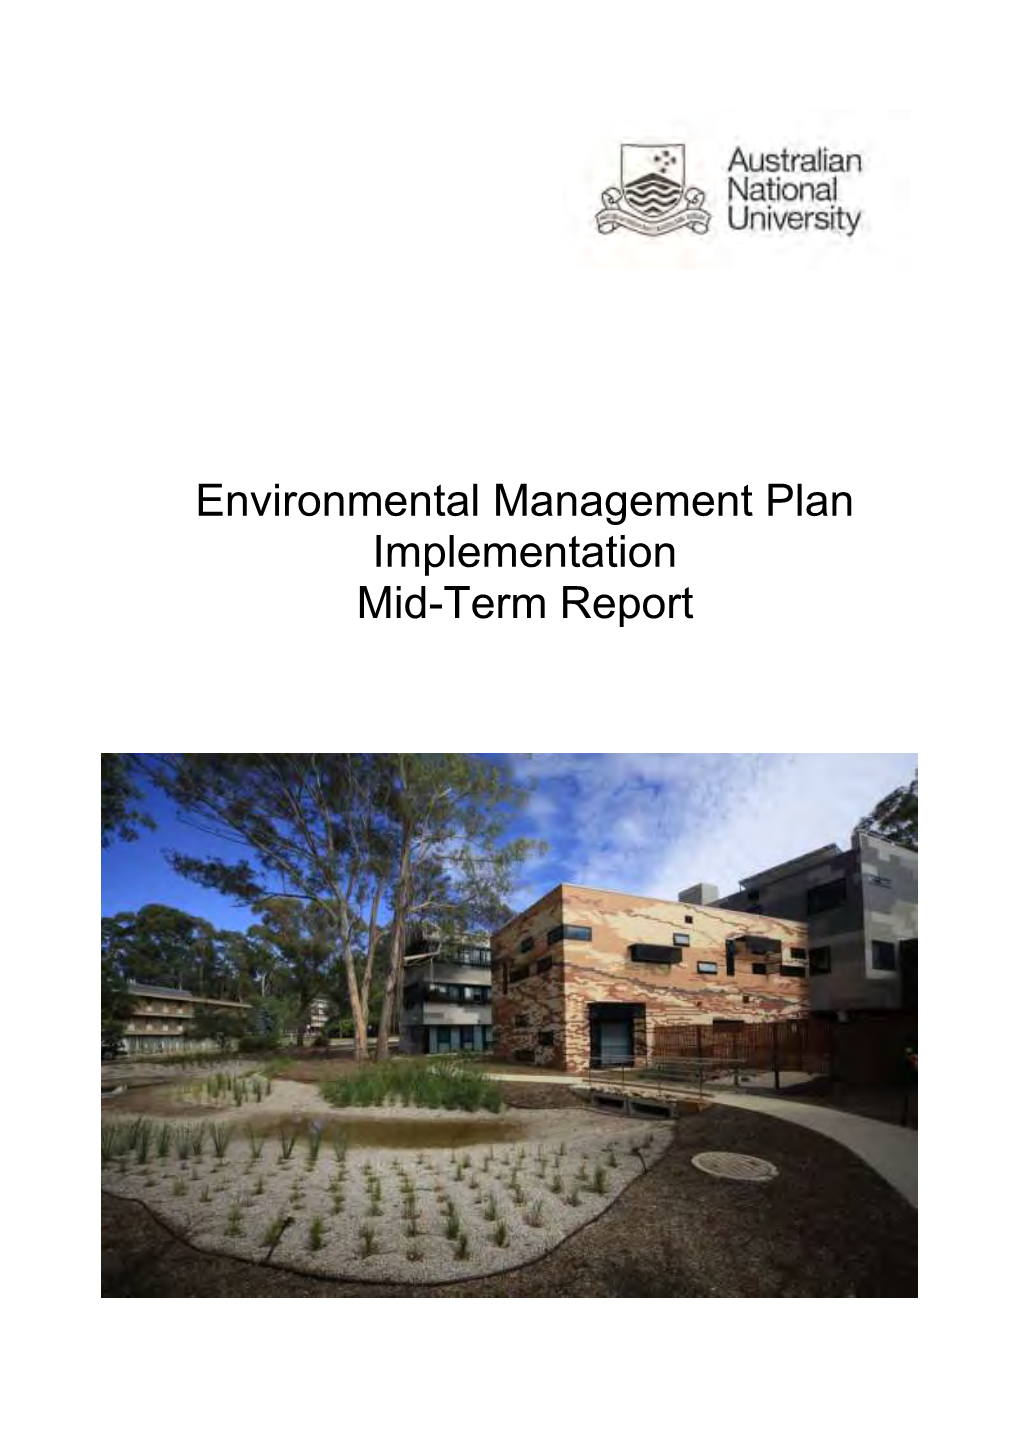 Environmental Management Plan Implementation Mid-Term Report